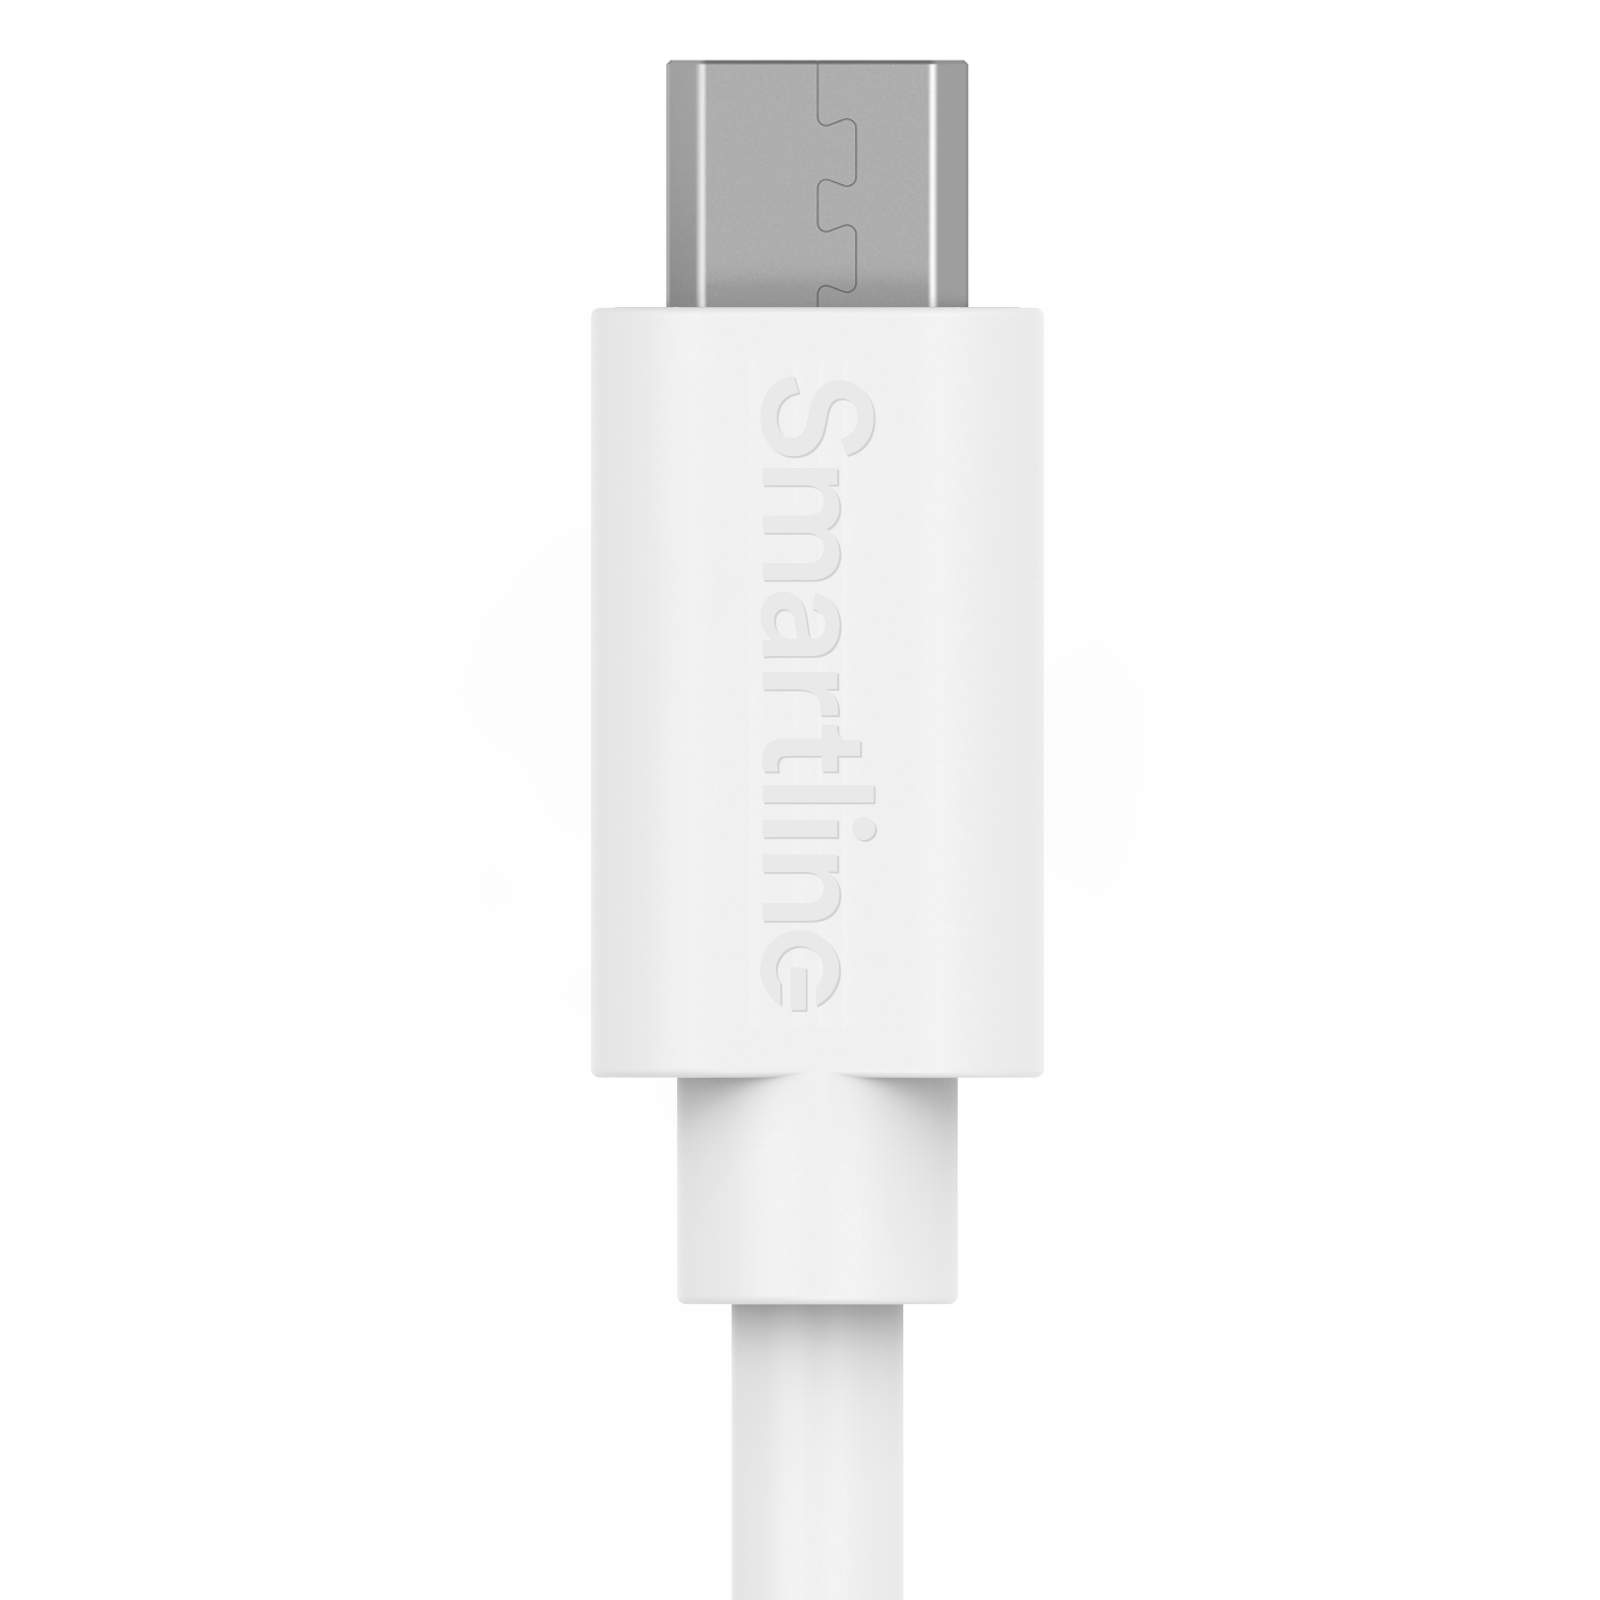 USB Cable MicroUSB 1m hvid